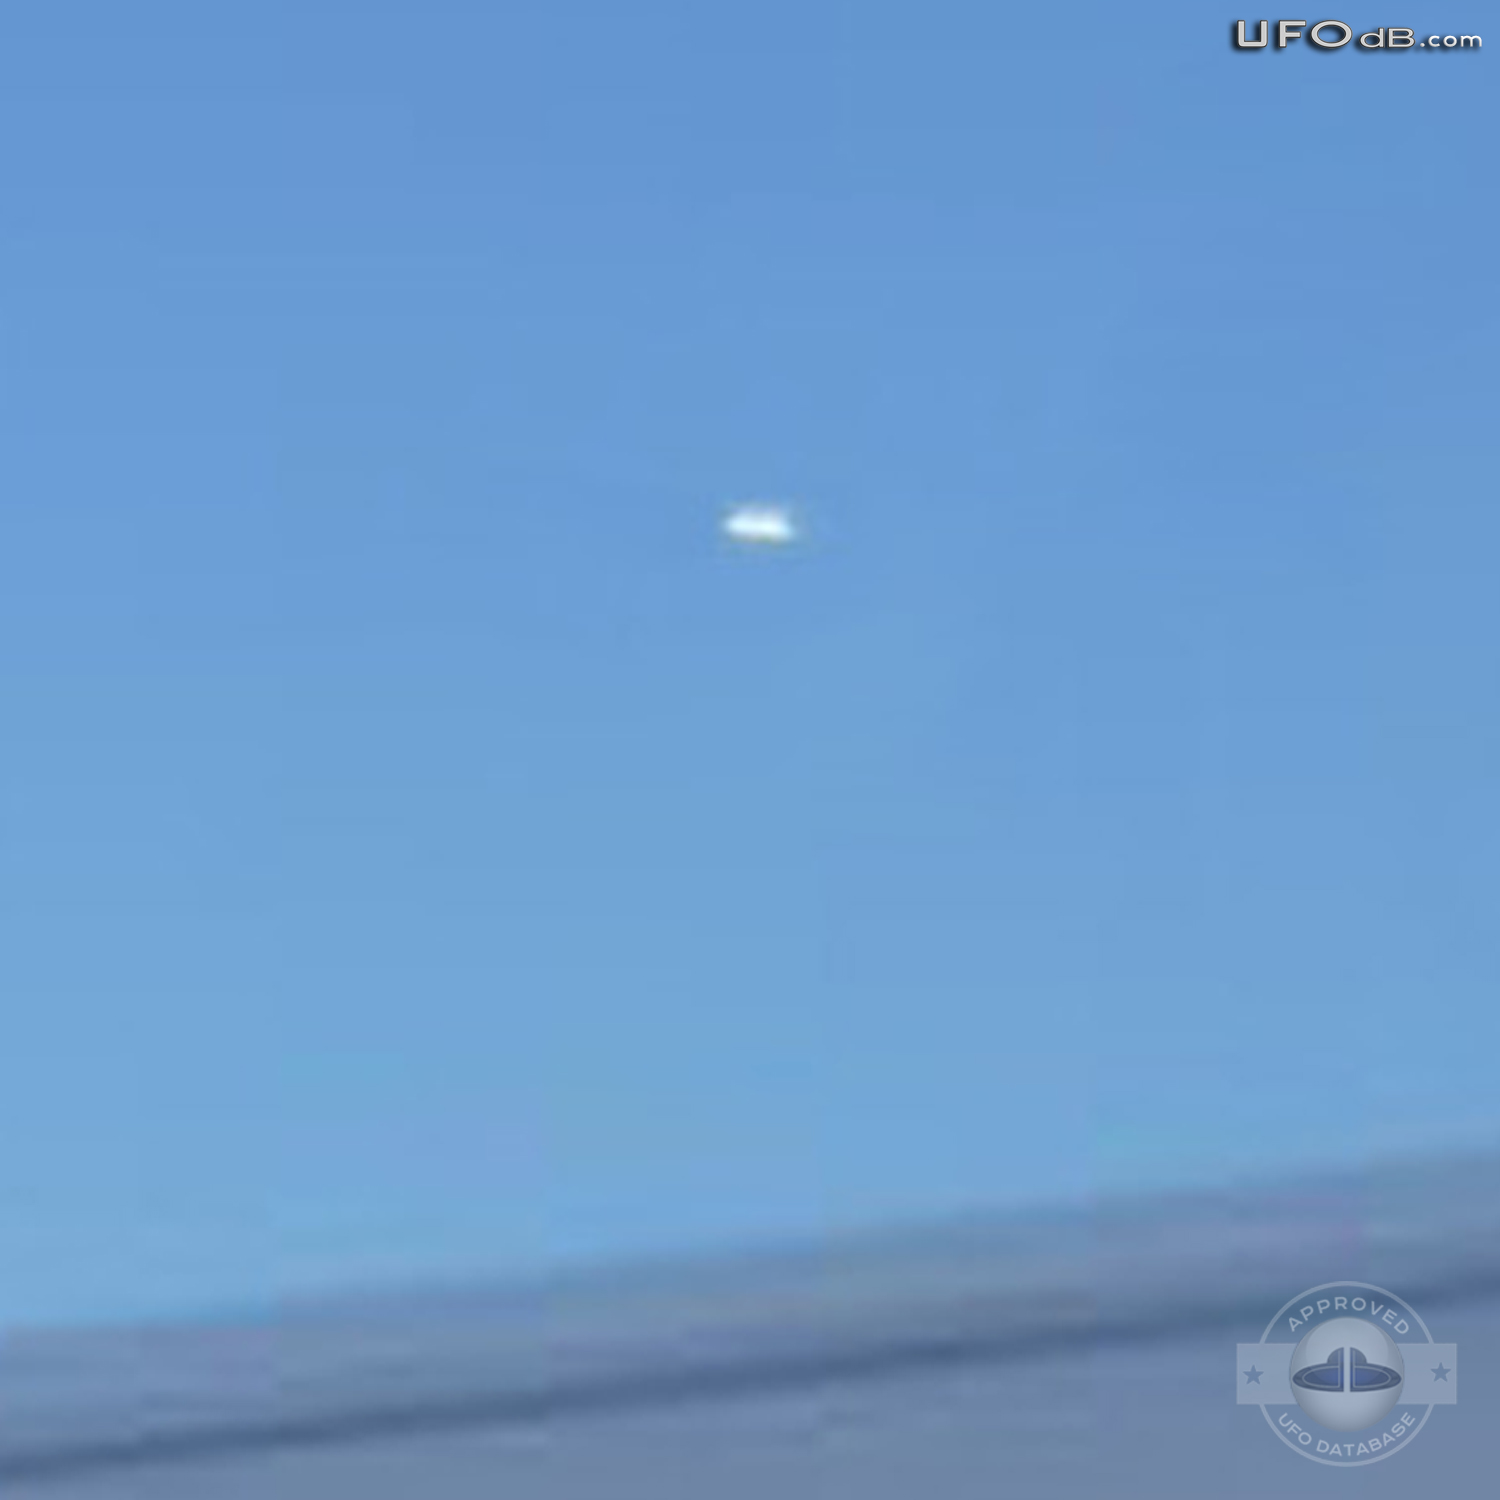 TACA passenger get UFO picture during flight over Peru | June 18 2010 UFO Picture #317-4